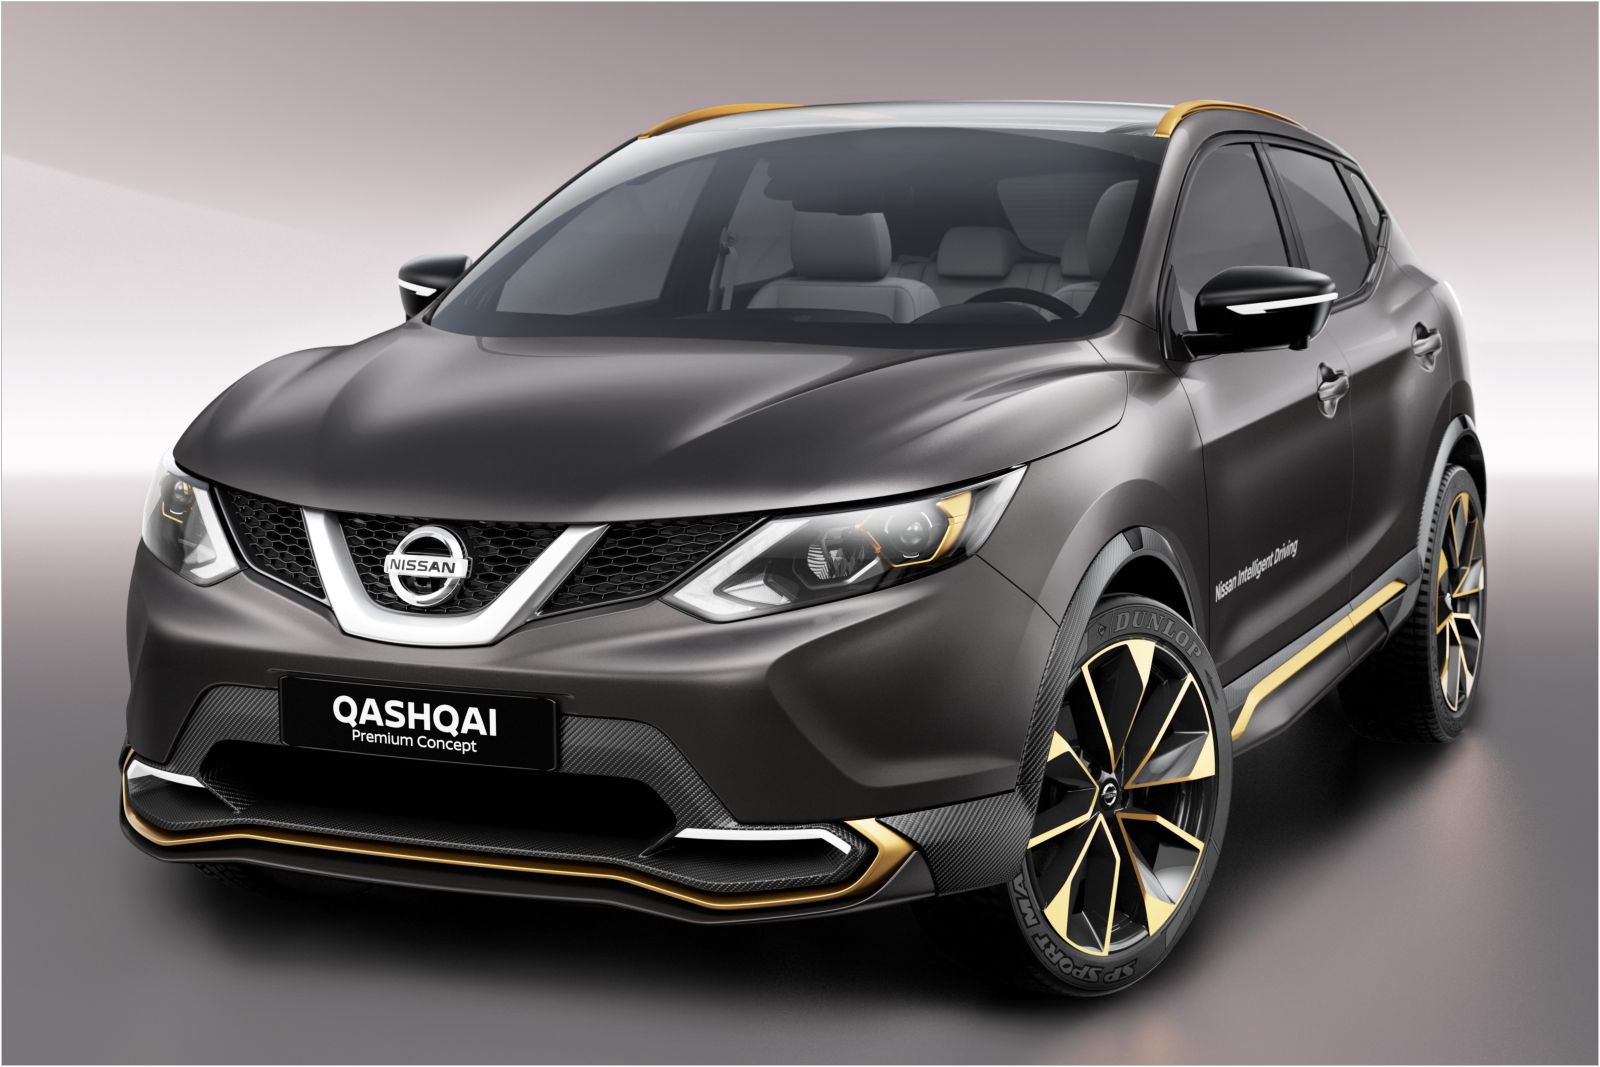 Nissan Qashqai Premium Concept, 1600x1067px, img-1